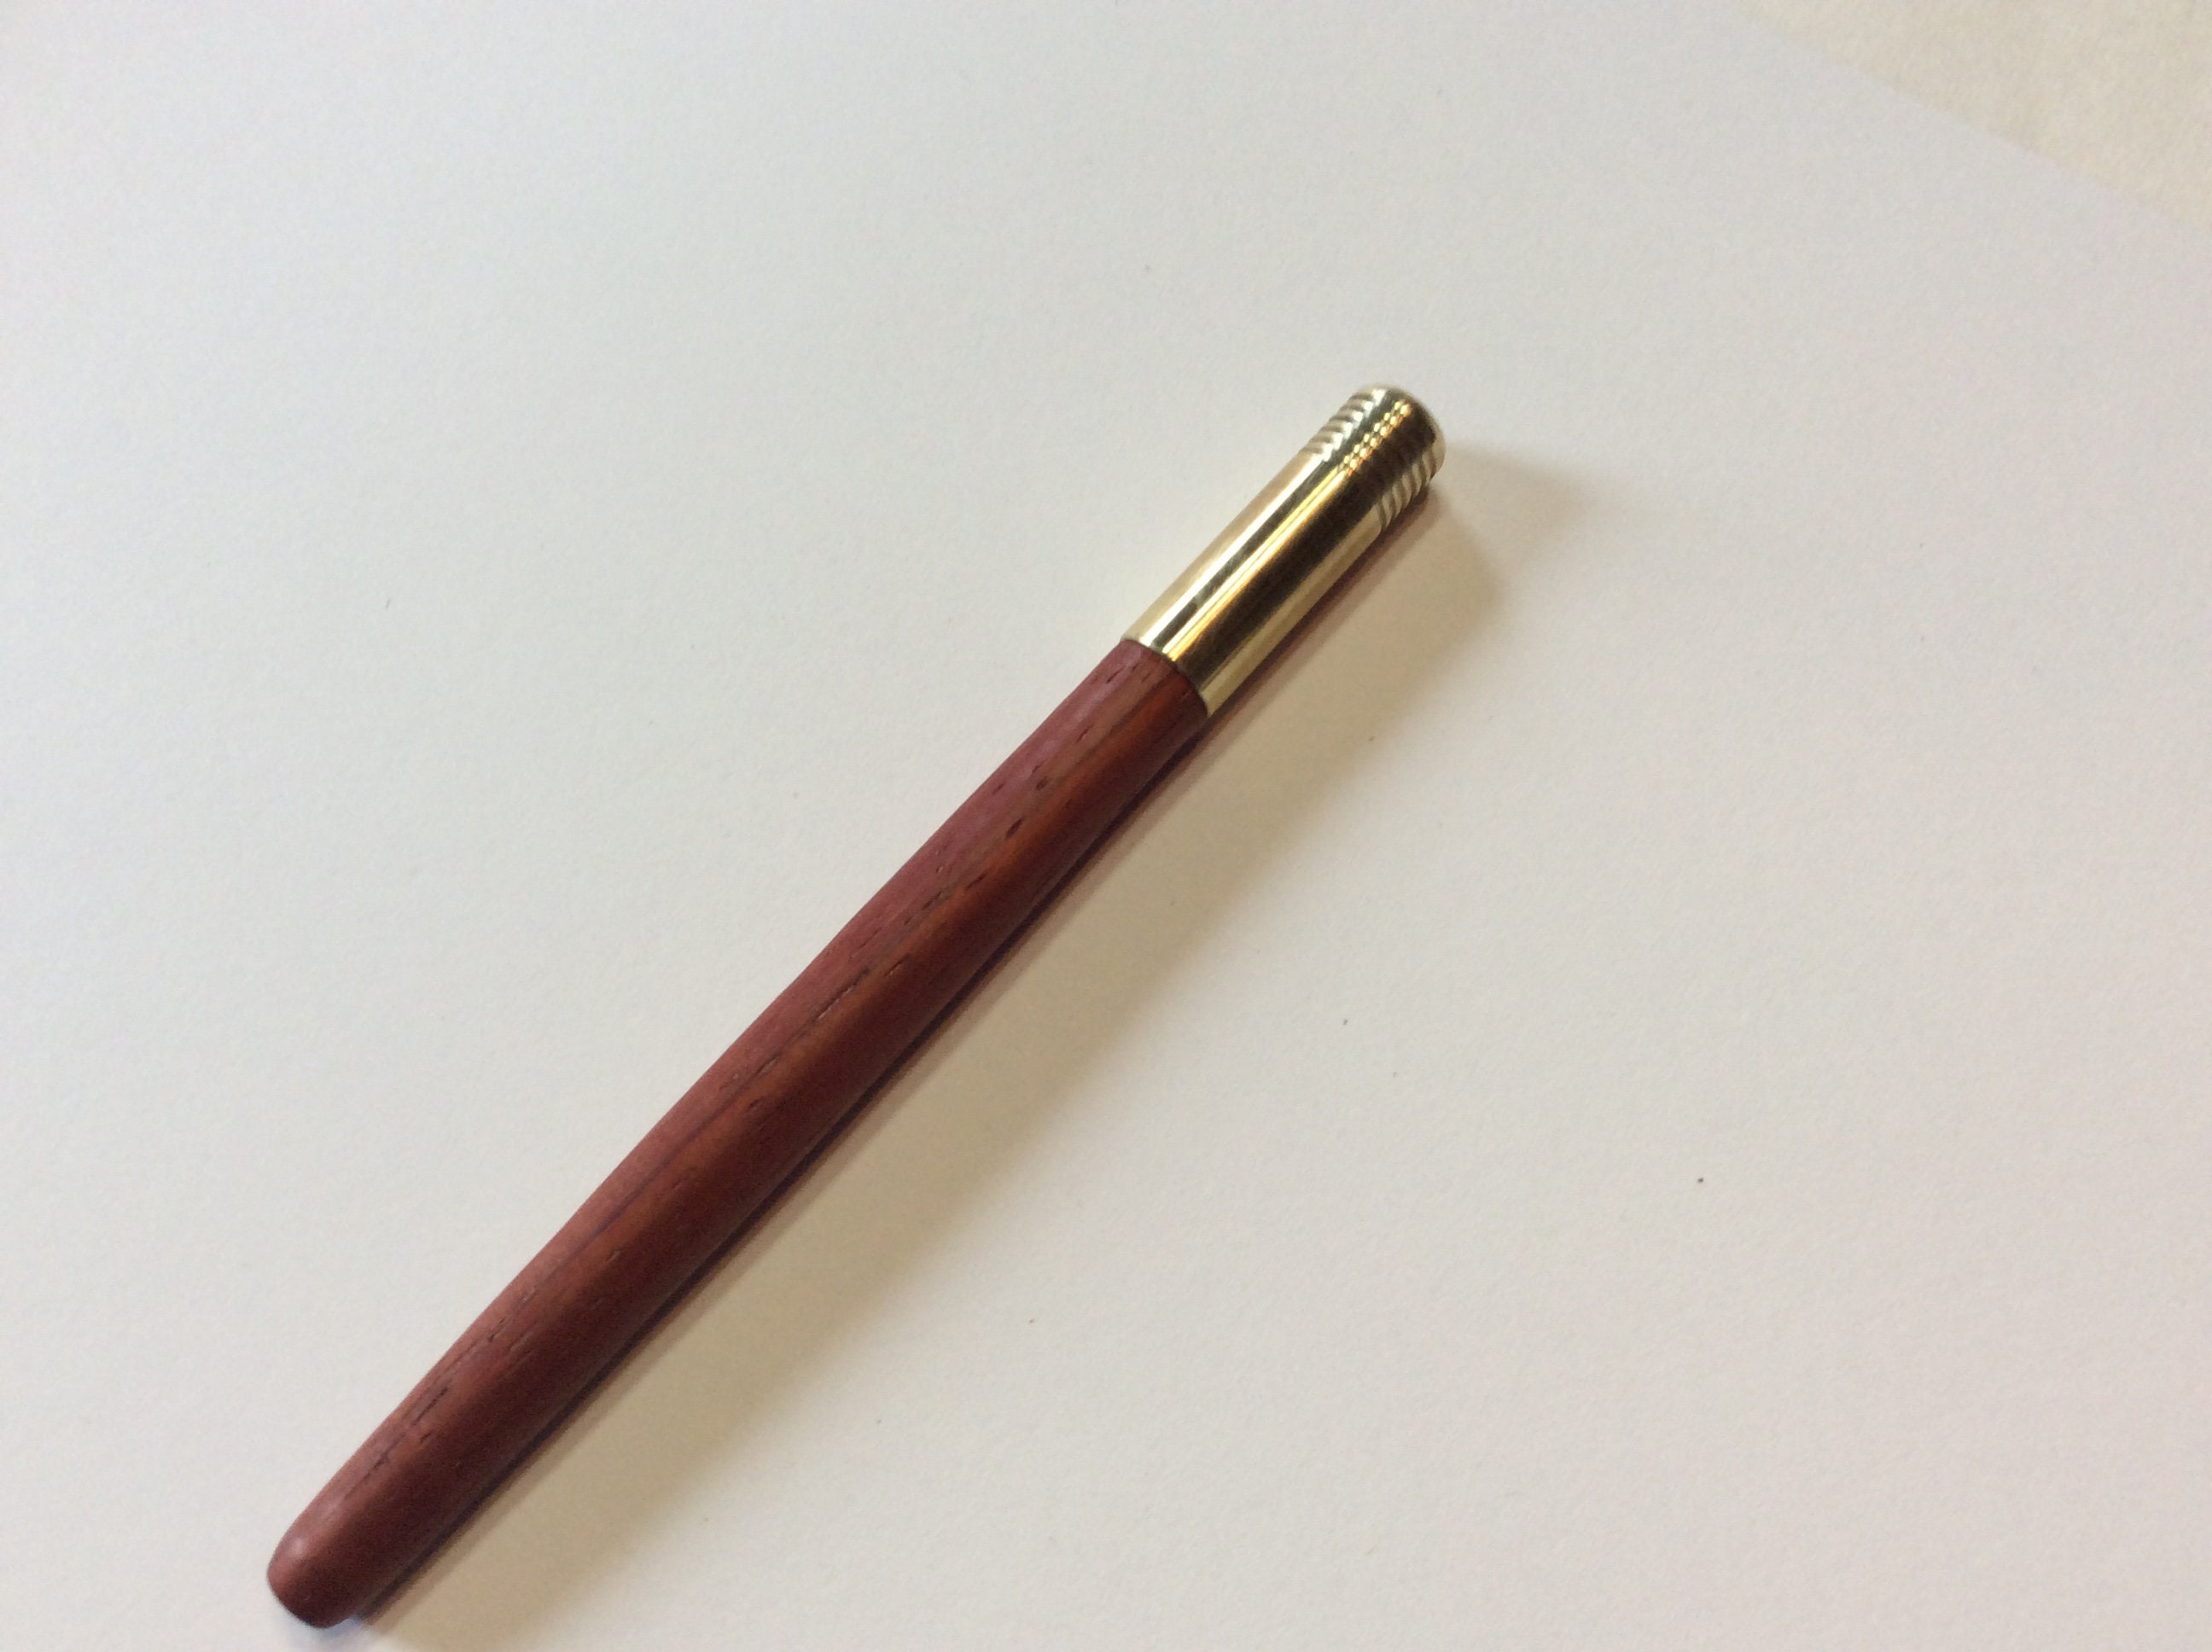 12Pcs Pencil Extenders, Pencil Lengthener, Wooden Handle Adjustable Head Pencil  Extender Holder, School Write Tool 